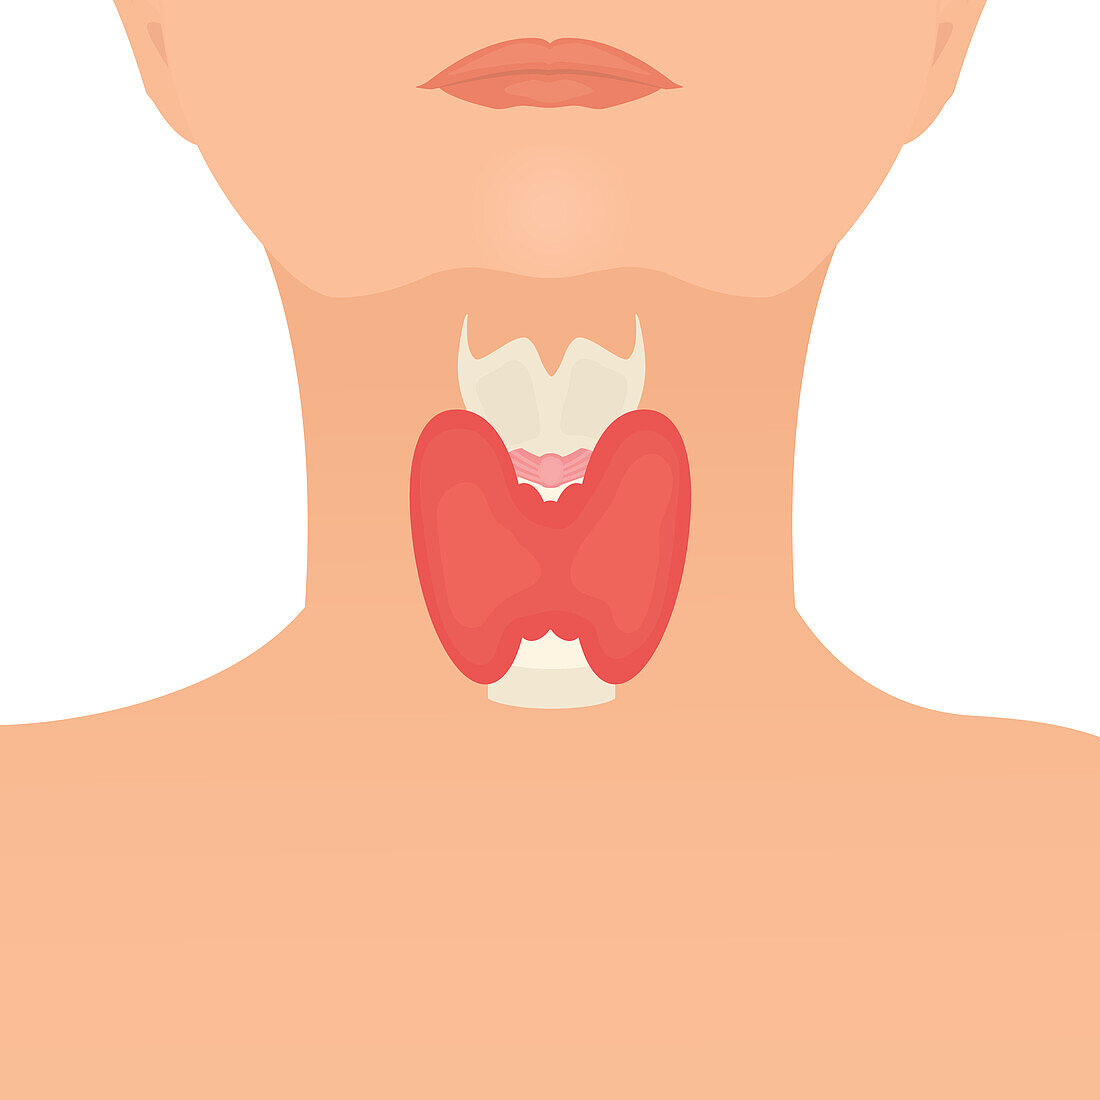 Thyroid health, conceptual illustration